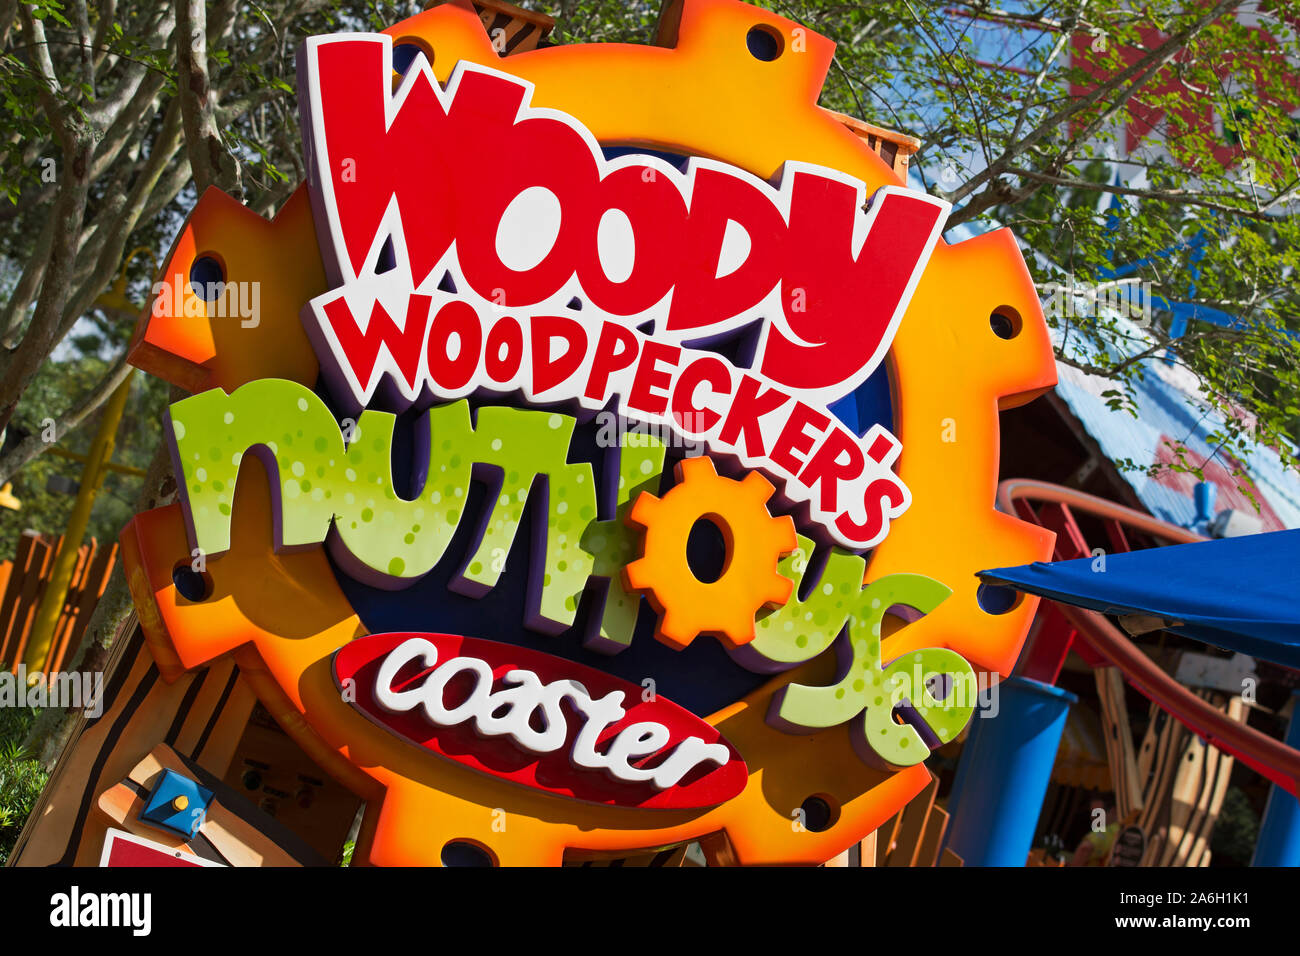 Woody Woodpecker's Nuthouse Coaster, Roller Coaster,People Entering, Universal Studios Resort, Orlando, Florida, USA Stock Photo